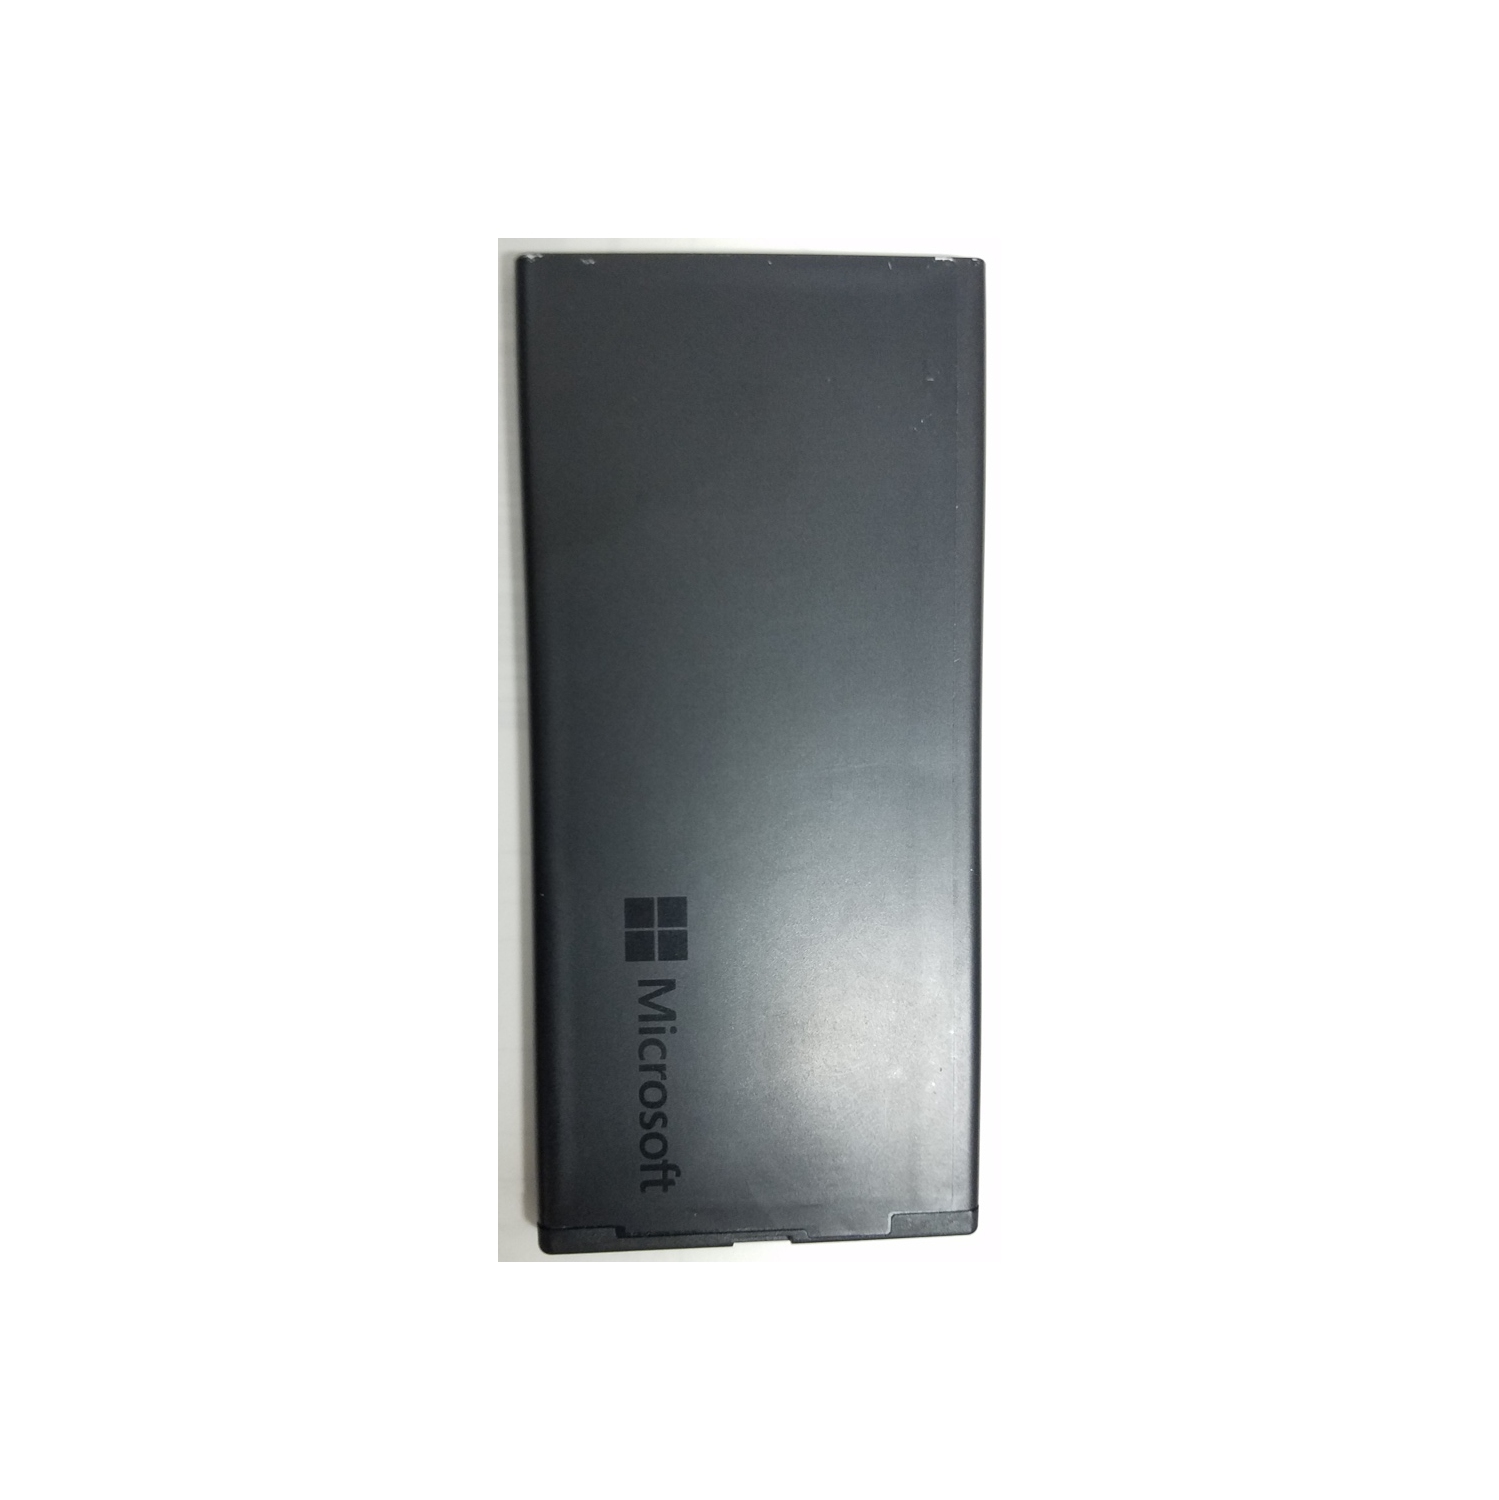 Microsoft Lumia 640 XL LTE Smartphone Battery OEM BV-T4B 3000mAh 3.8V 11.4 Wh